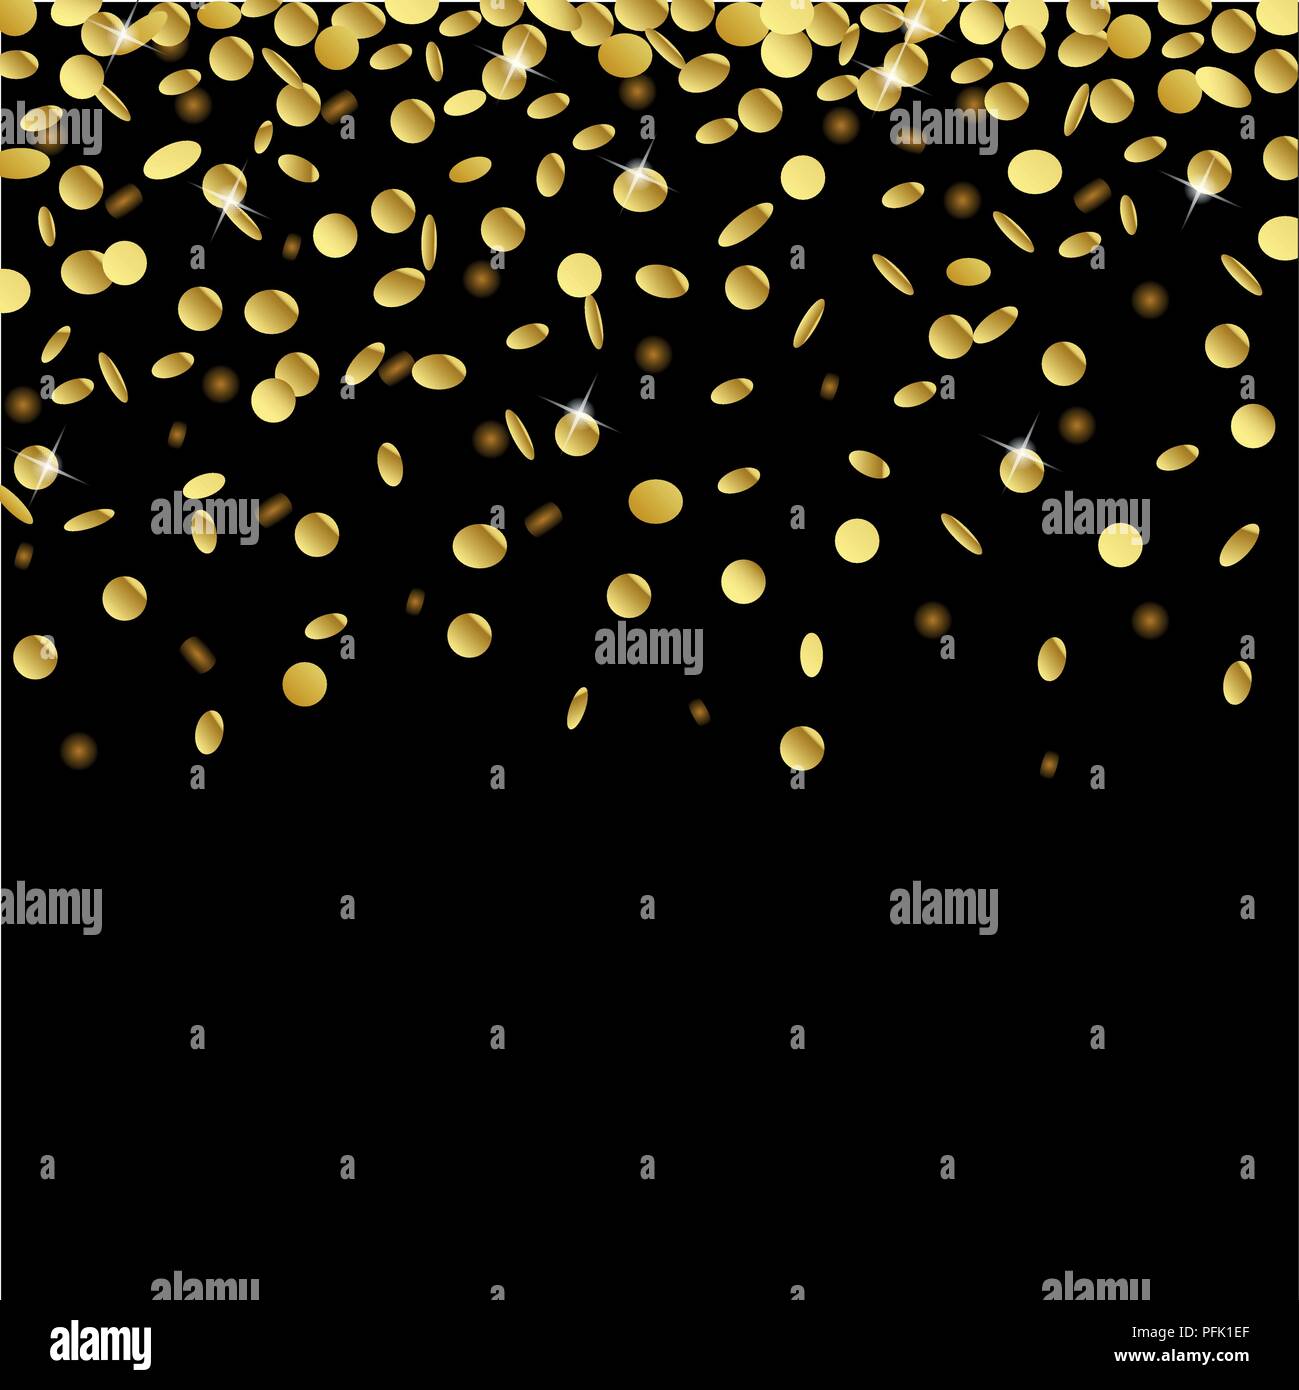 golden confetti on black background vector illustration EPS10 Stock Vector